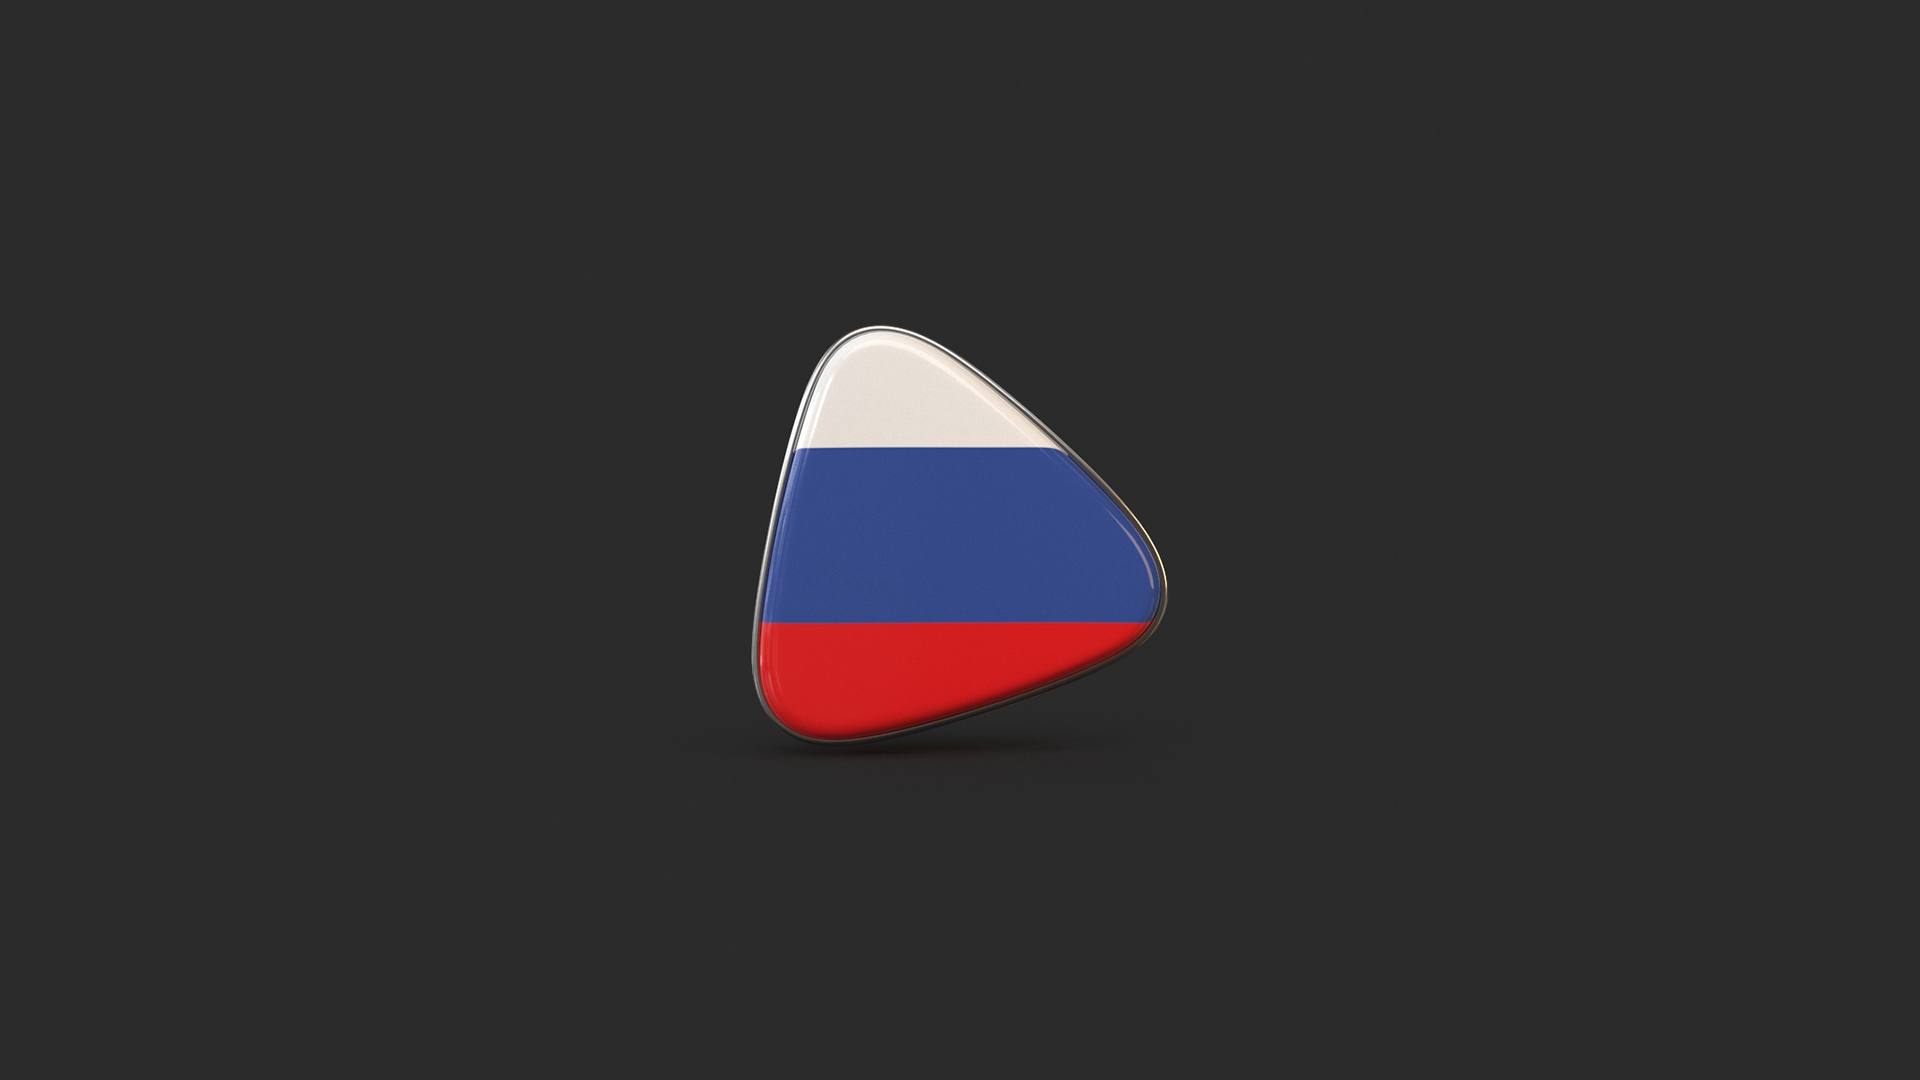 Russia Flag Icon, Flag 3 Iconpack